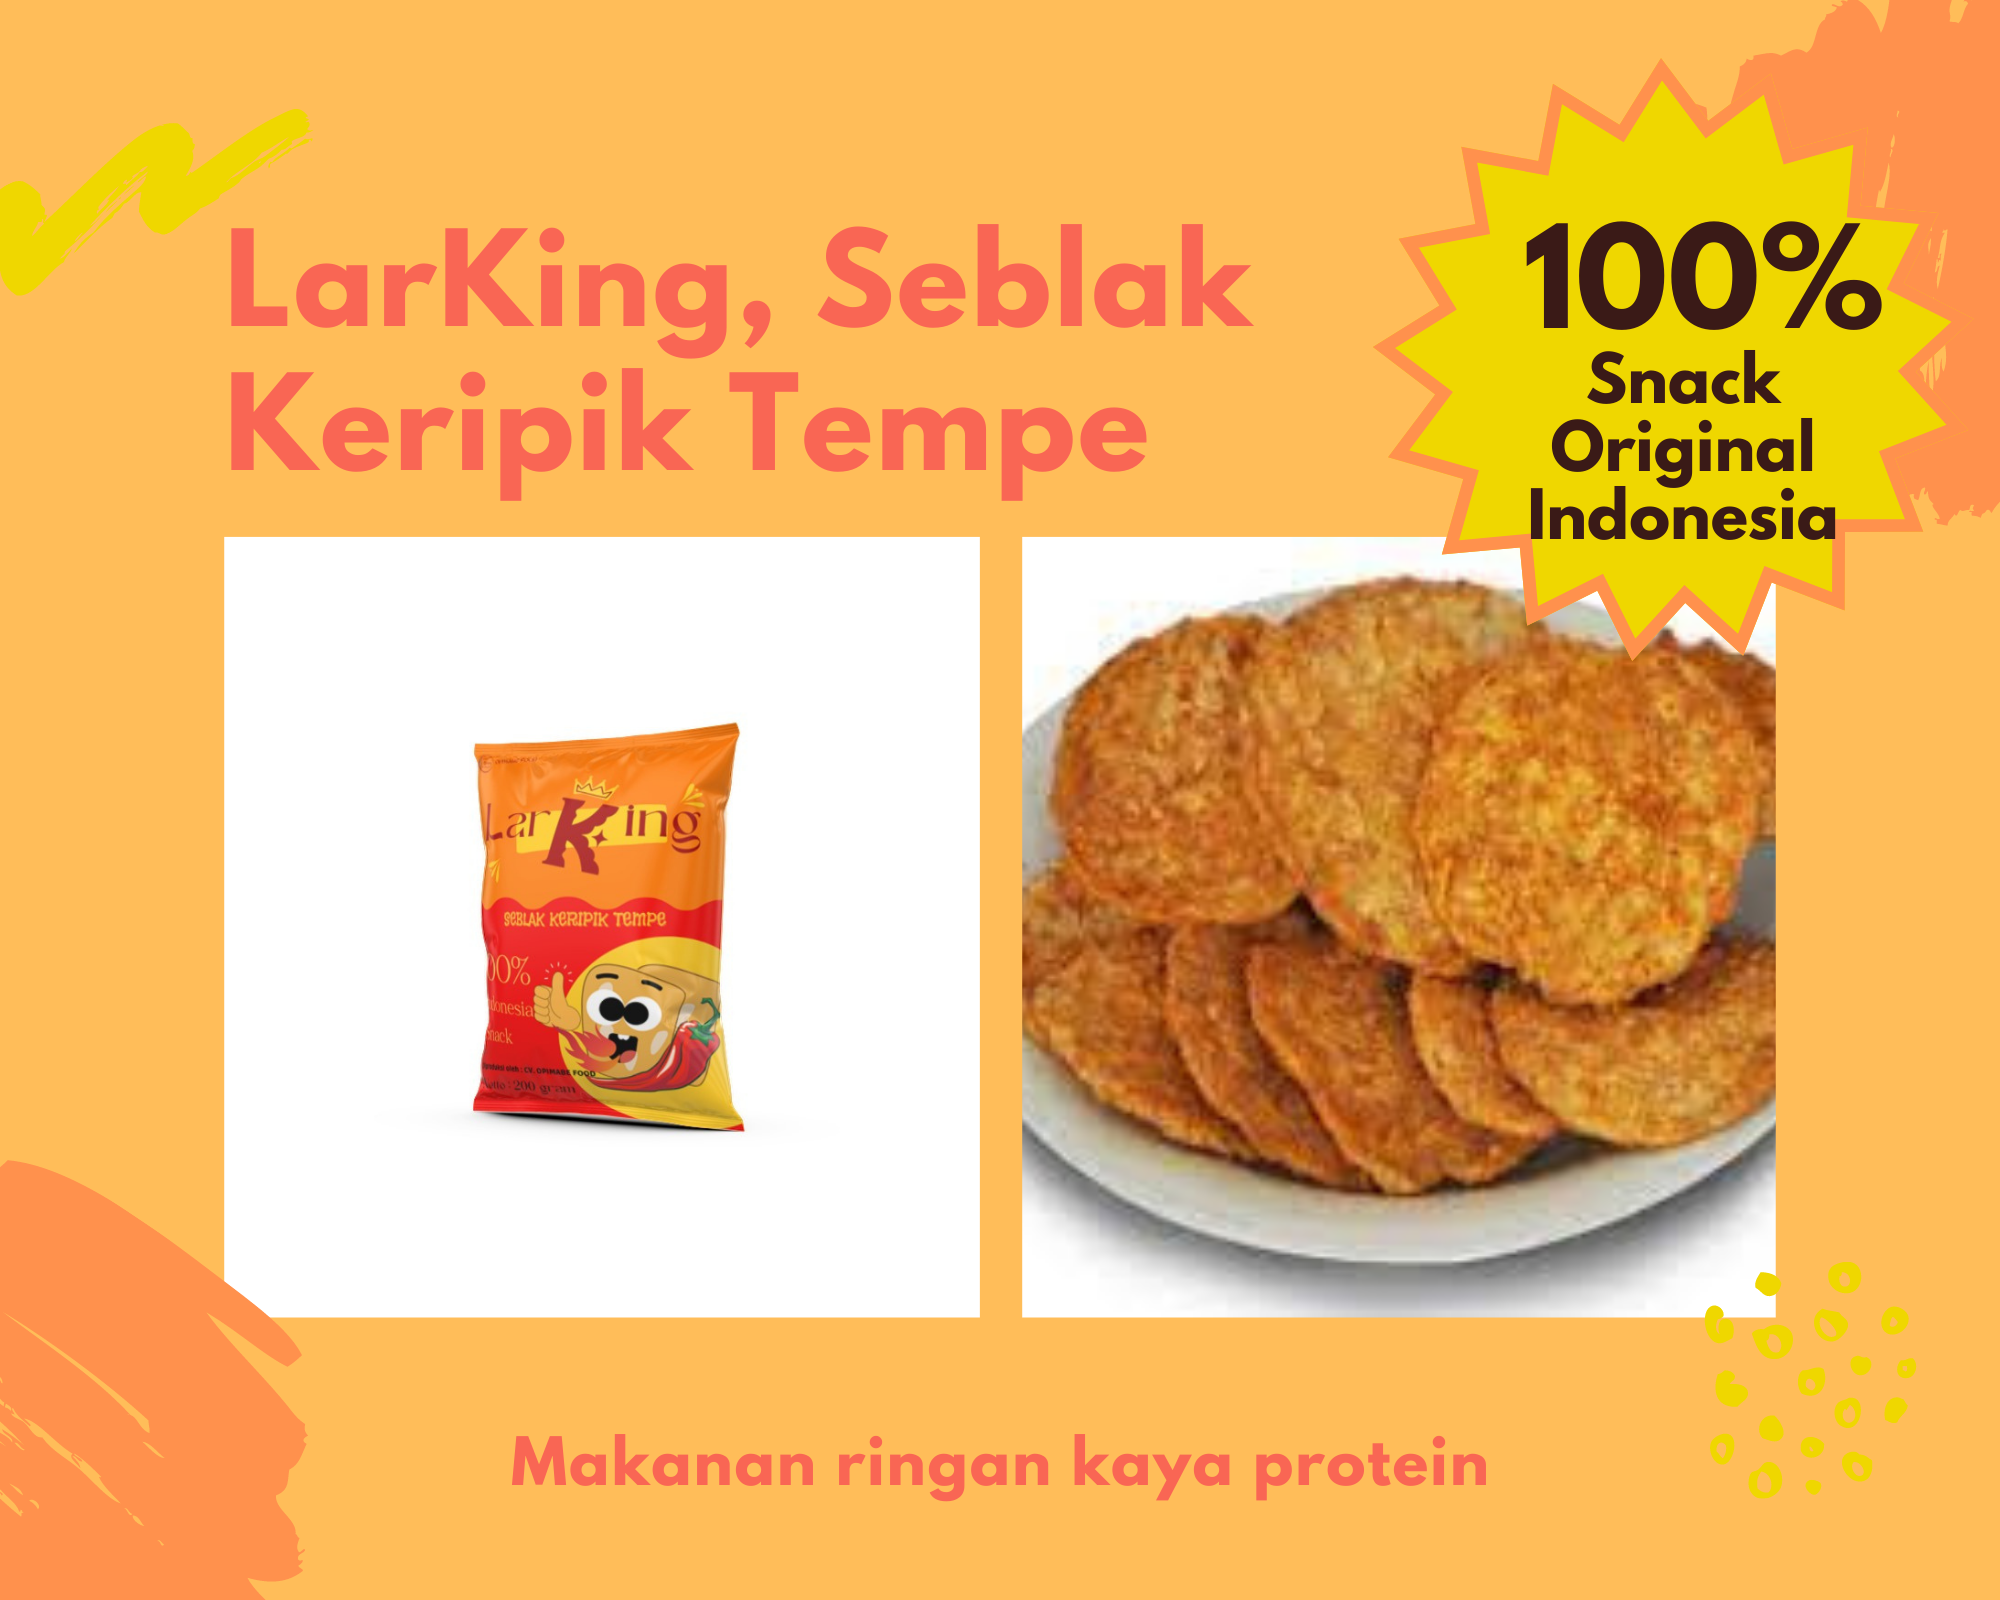 100% Snack Original Indonesia, Seblak Keripik Tempe Menjadi Produk Makanan Ringan Terbaru Yang Akan Dirilis oleh CV. OPIMABE FOOD